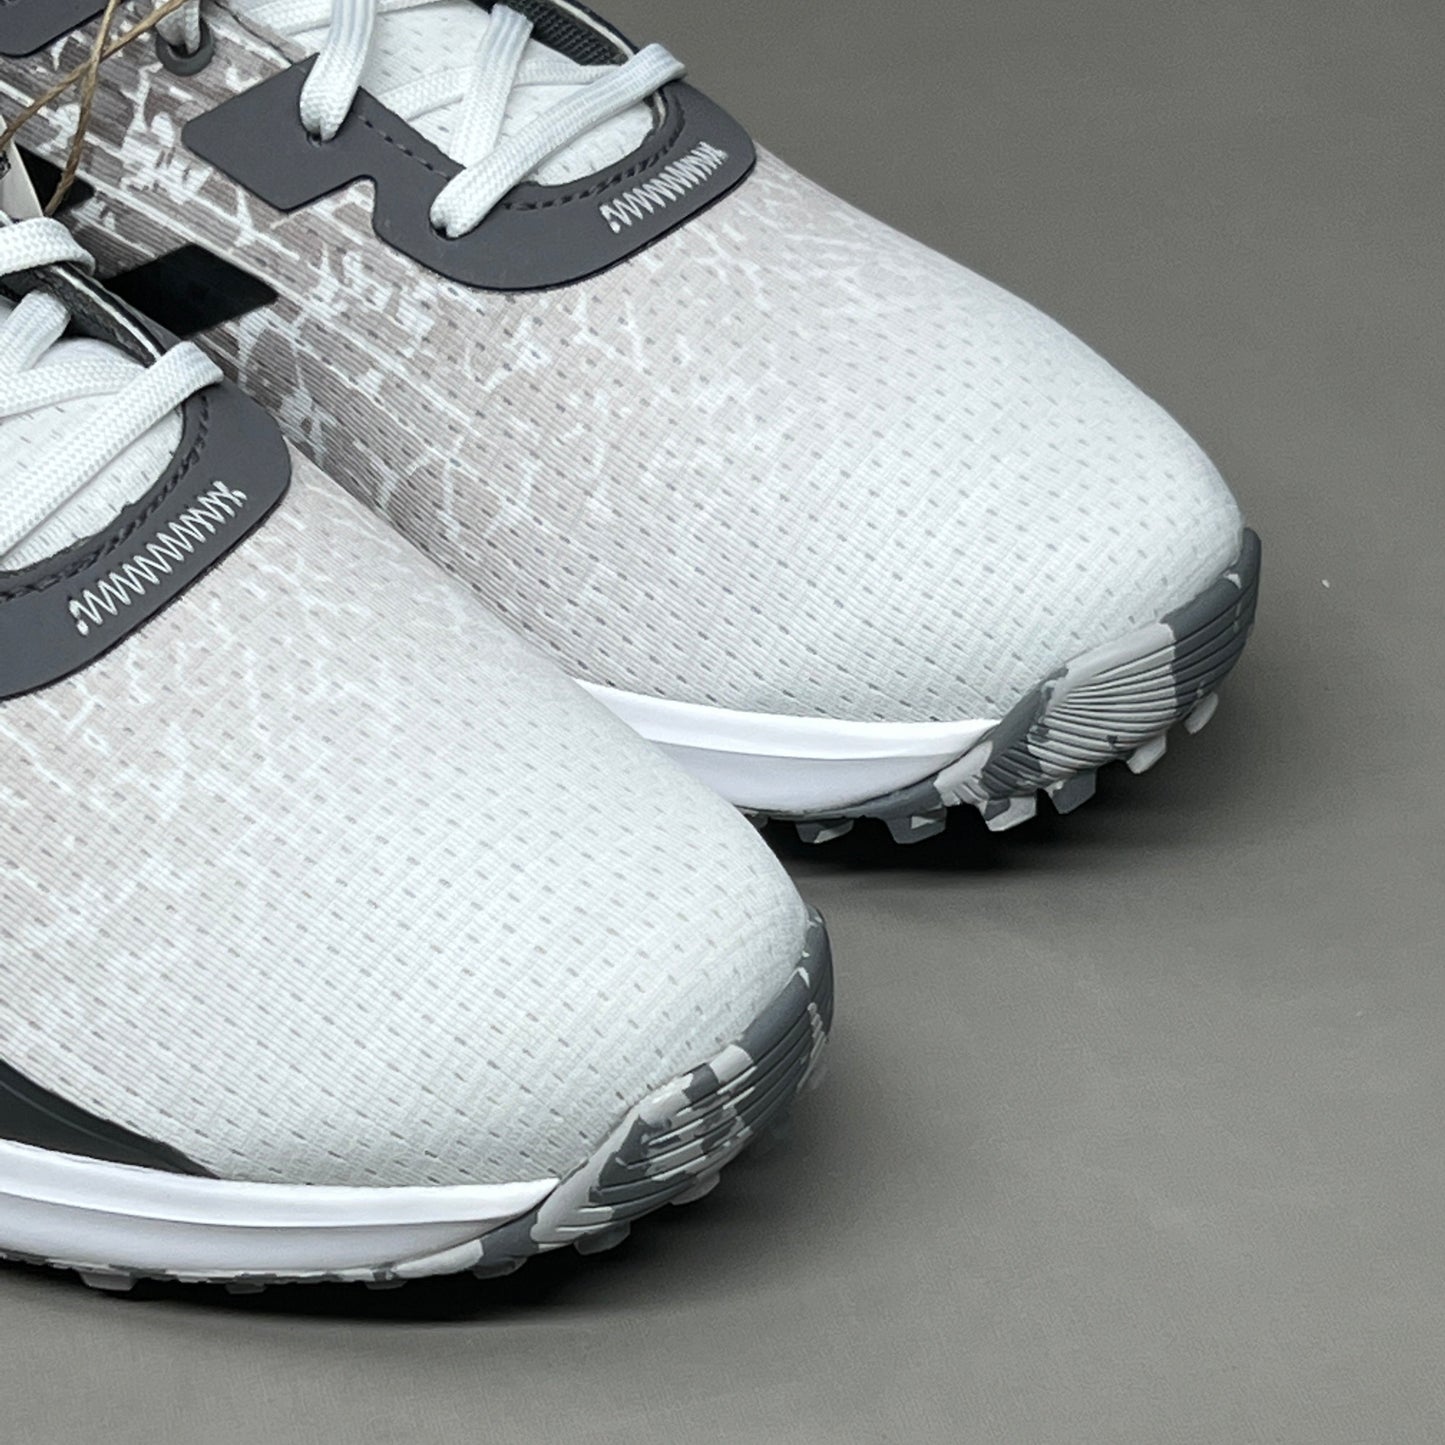 ADIDAS Golf Shoes S2G SL Waterproof Men's Sz 11.5 White / Grey GV9792 (New)